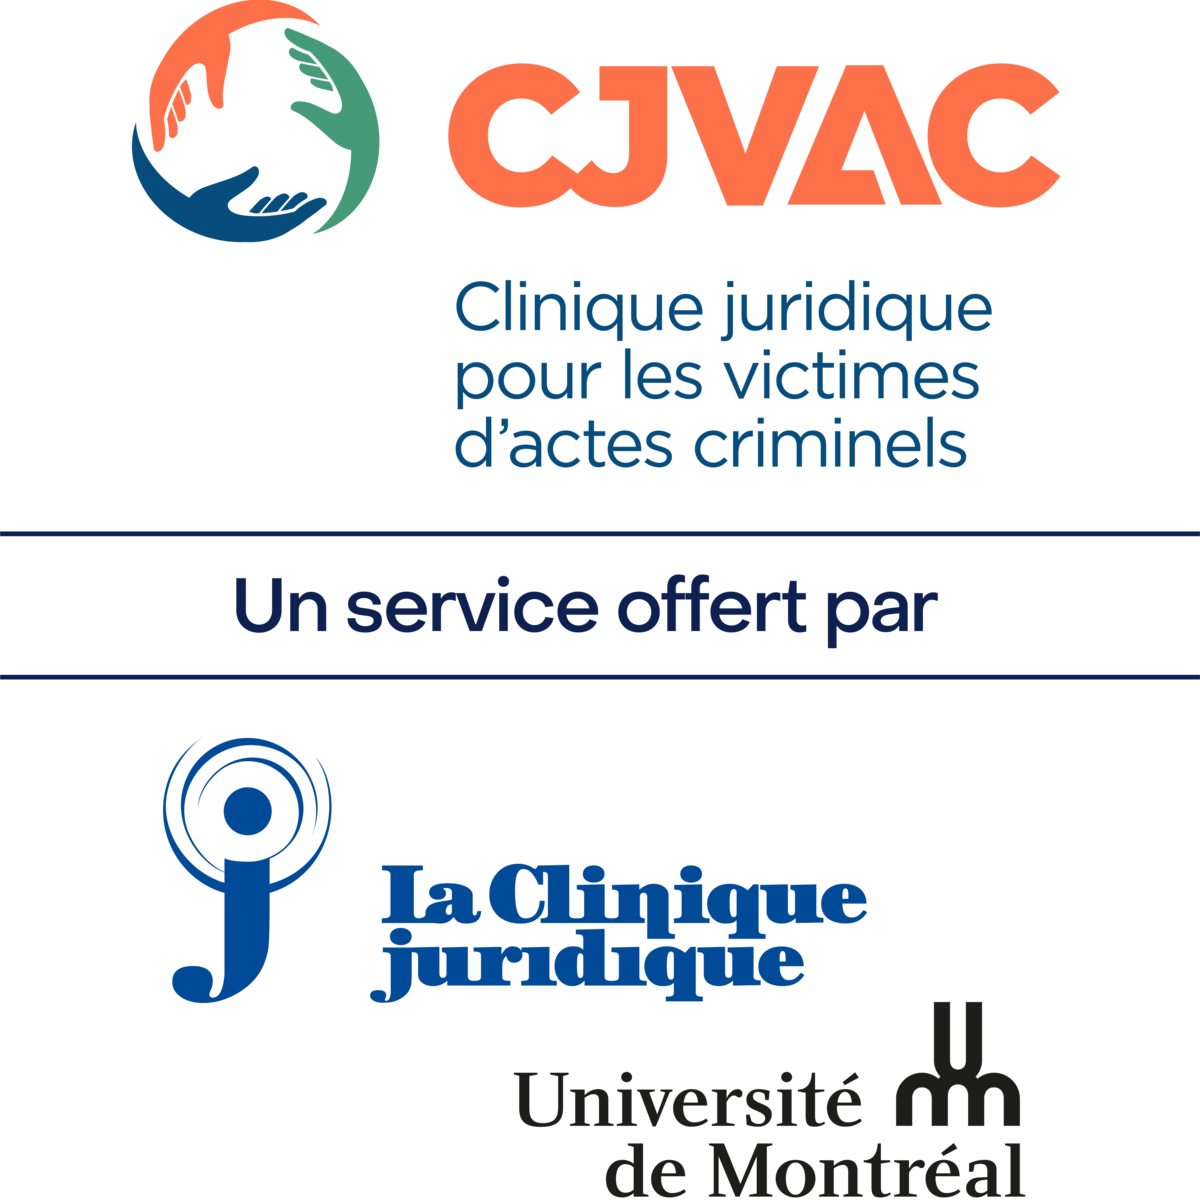 CJVAC Logo